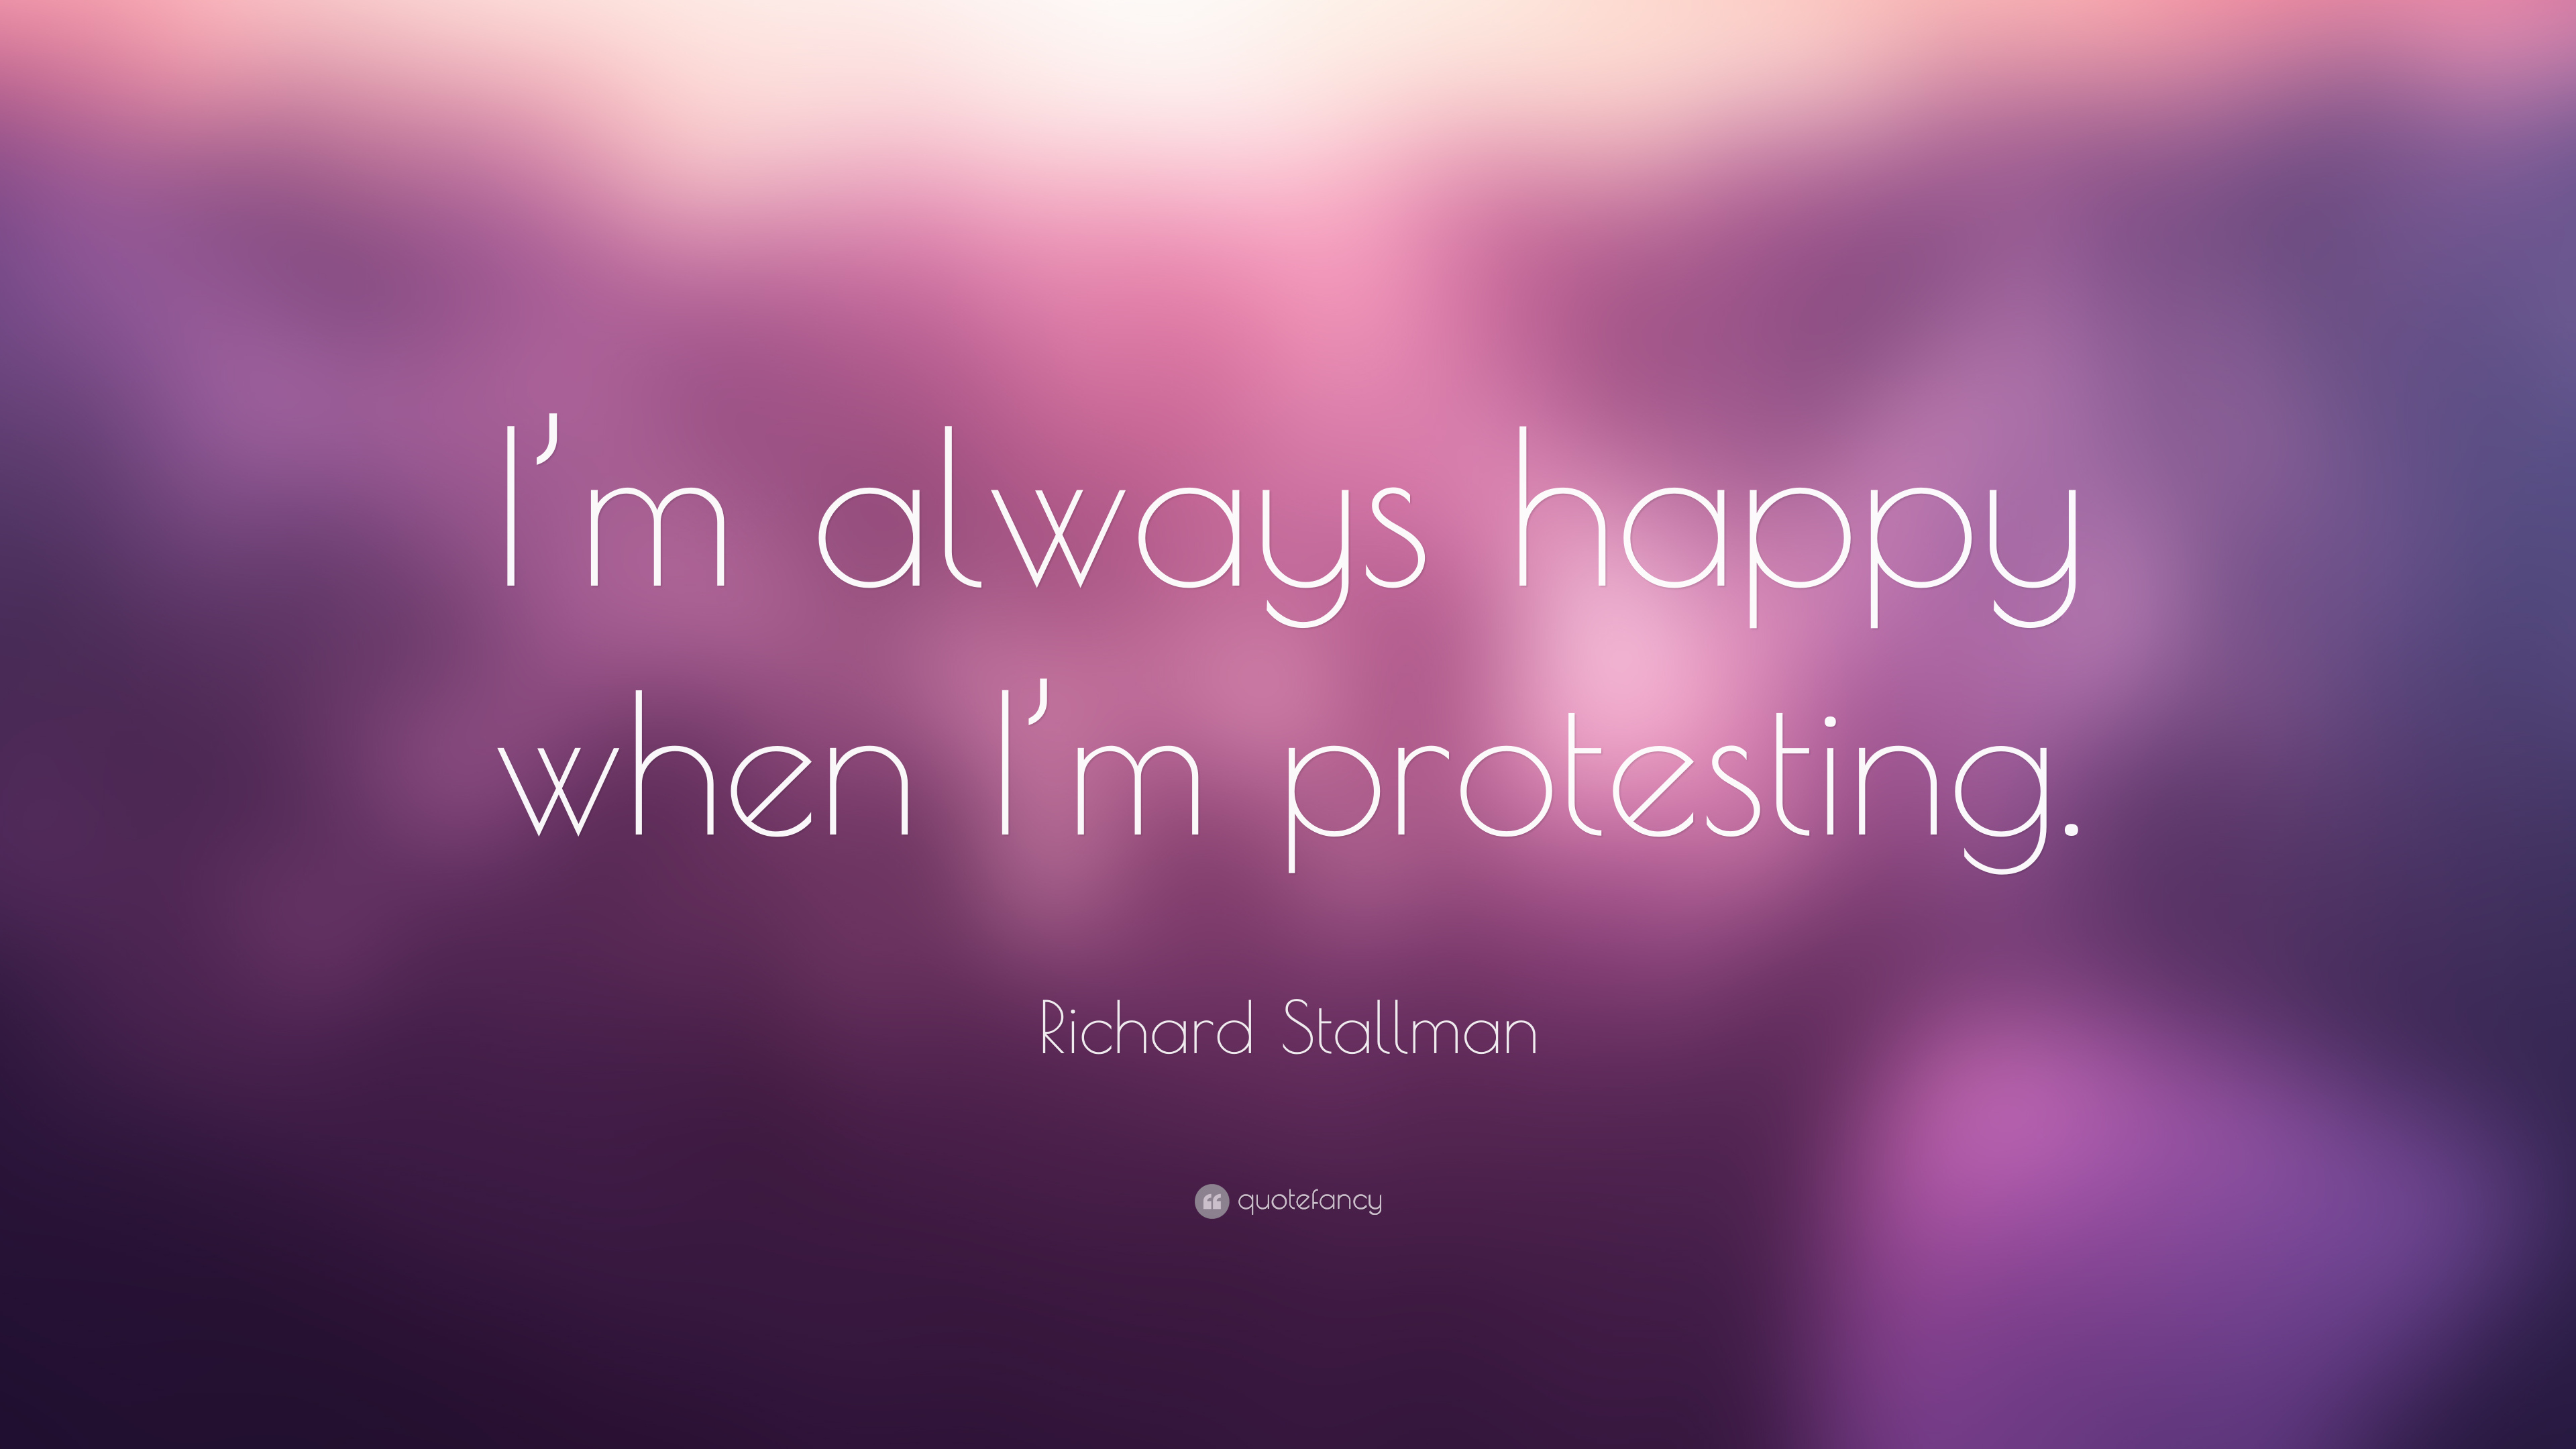 Richard Stallman Quote: “I'm always happy when I'm protesting.”